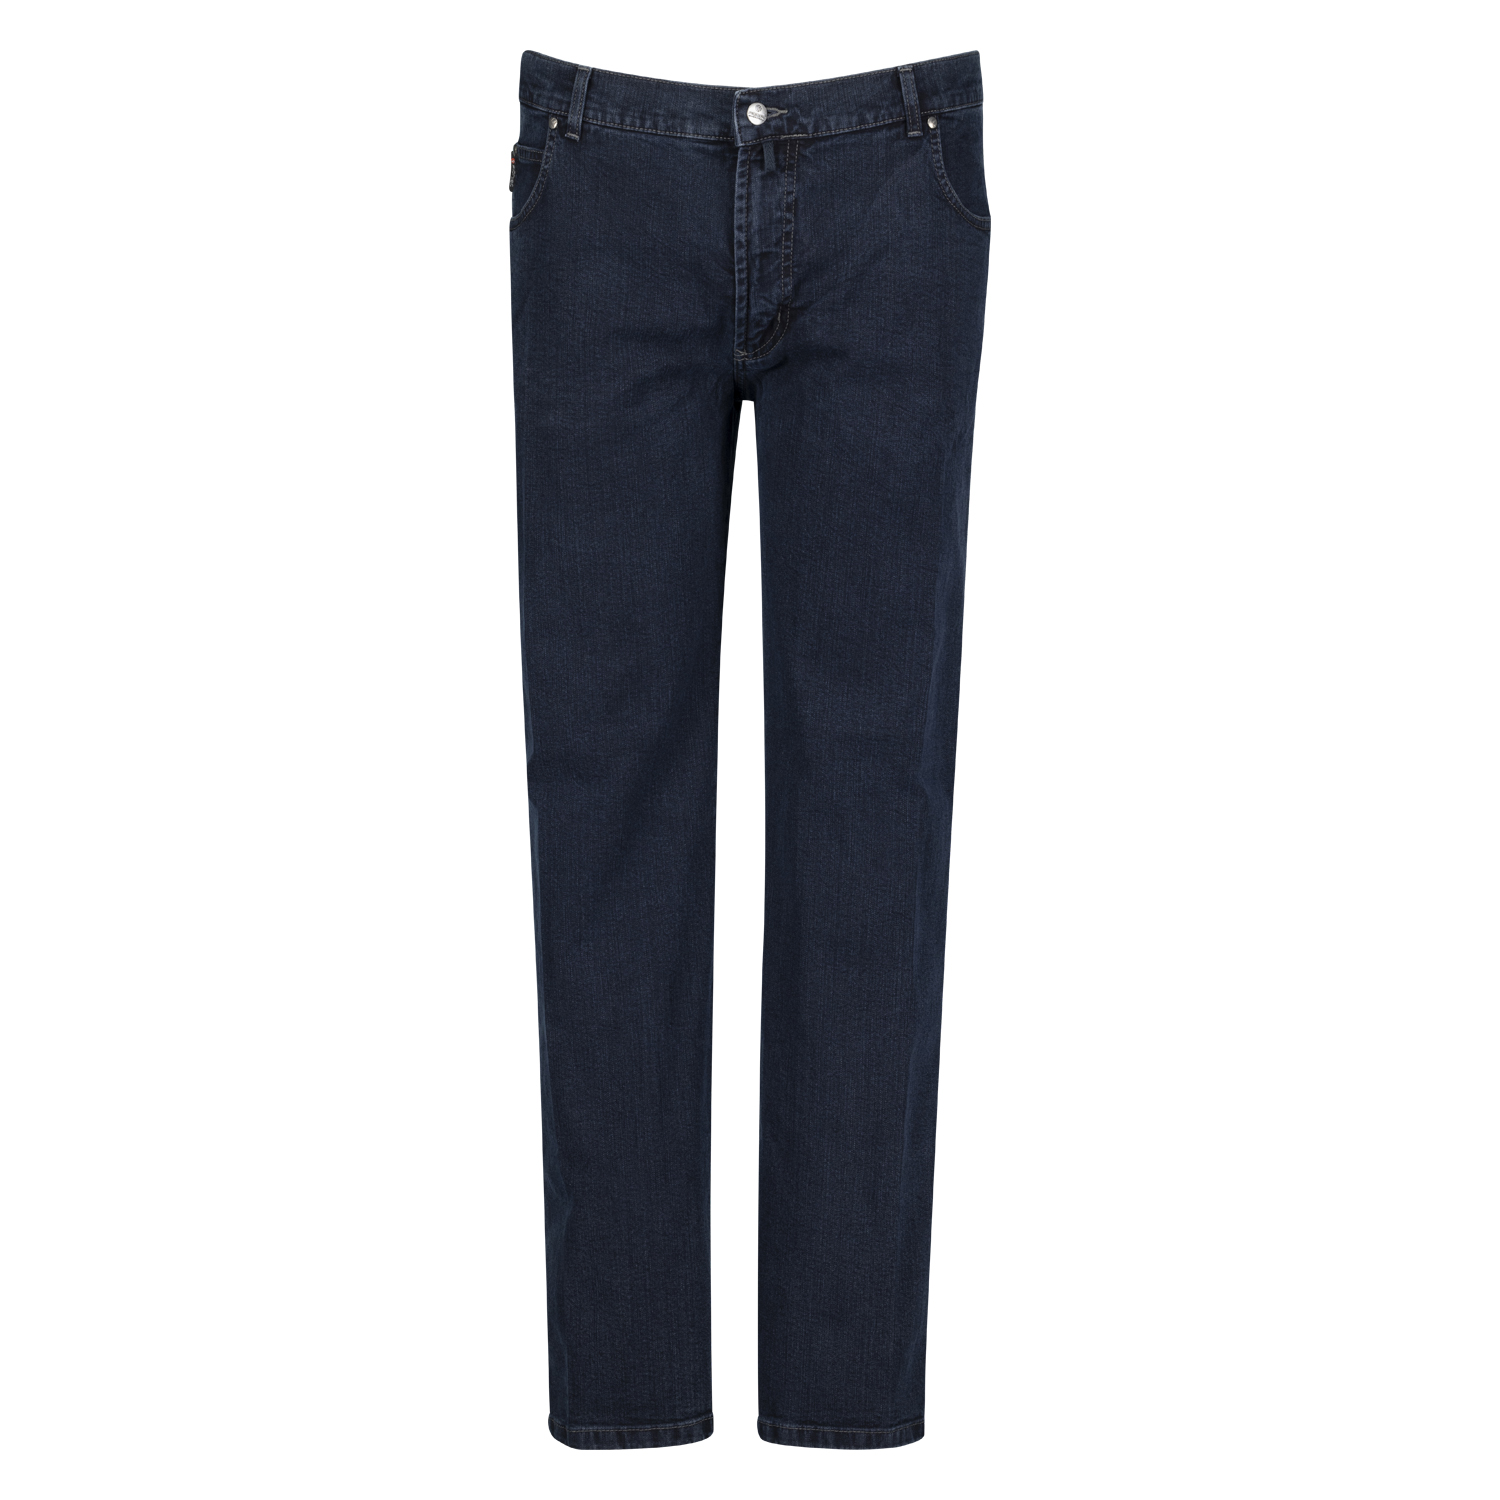 Five pocket jeans model "Peter" by Pioneer in oversize dark blue stonewash (regular rise): 56 - 74